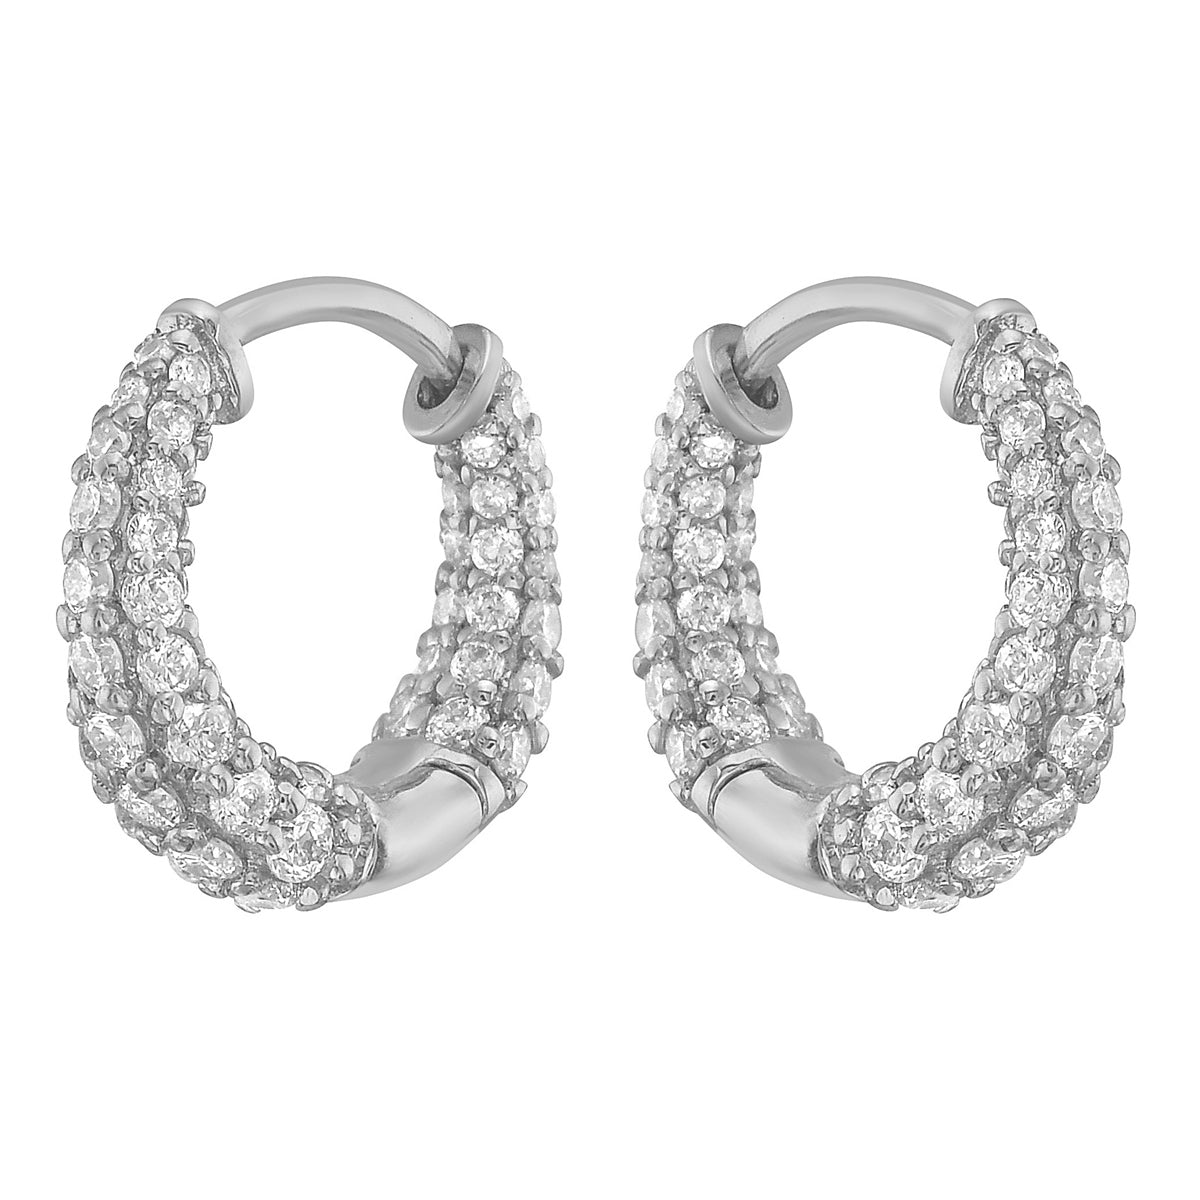 Triple Row White Gold Diamond Hoop Earrings